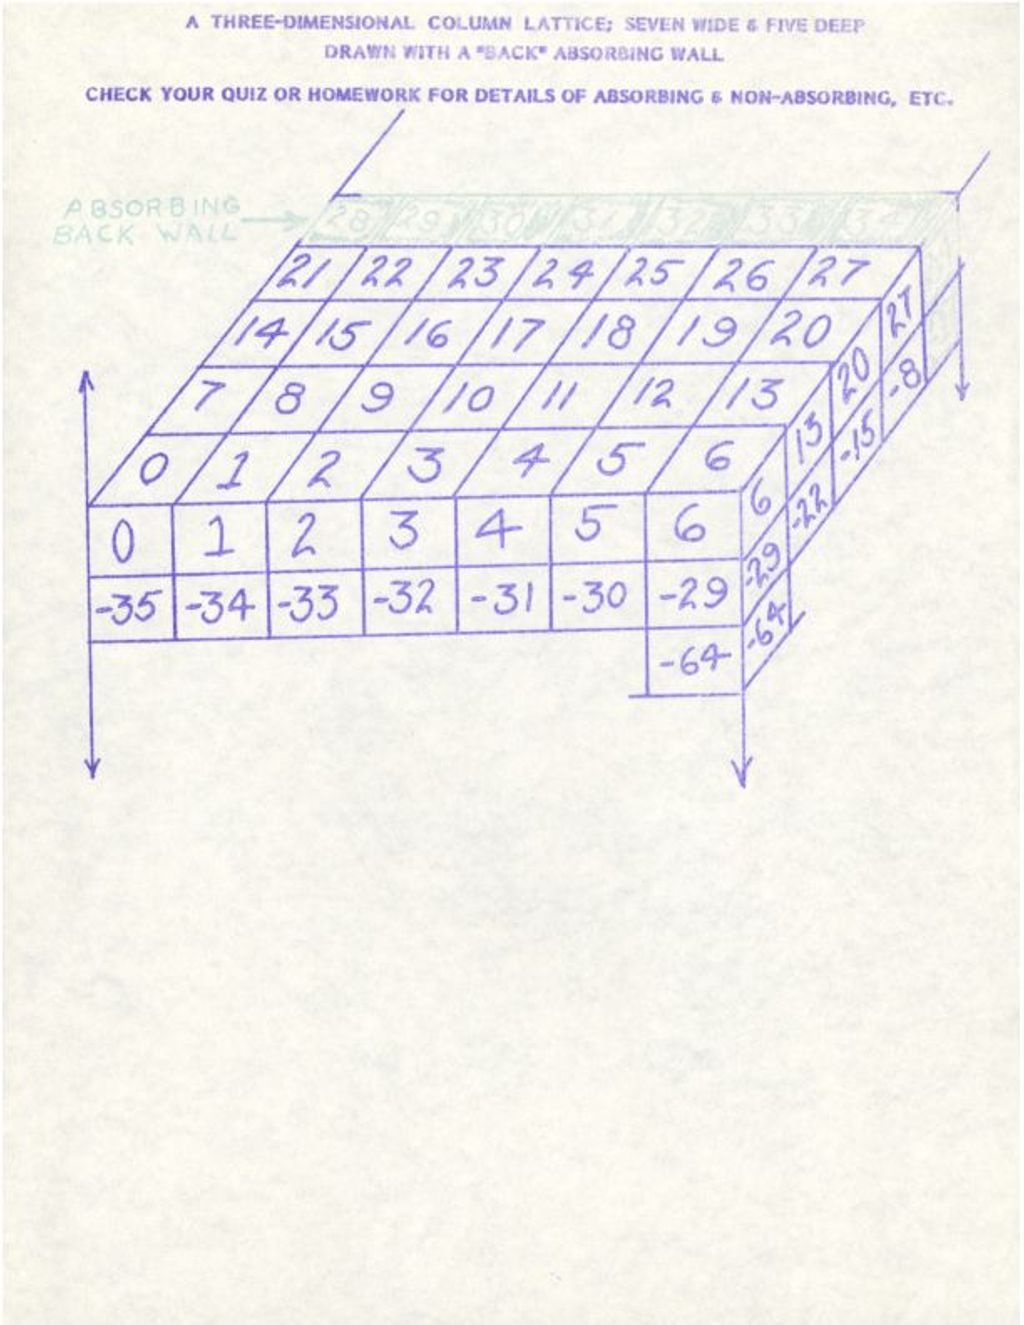 Miniature of A Three-Dimensional Column Lattice: Seven Wide and Five Deep (lattice only)